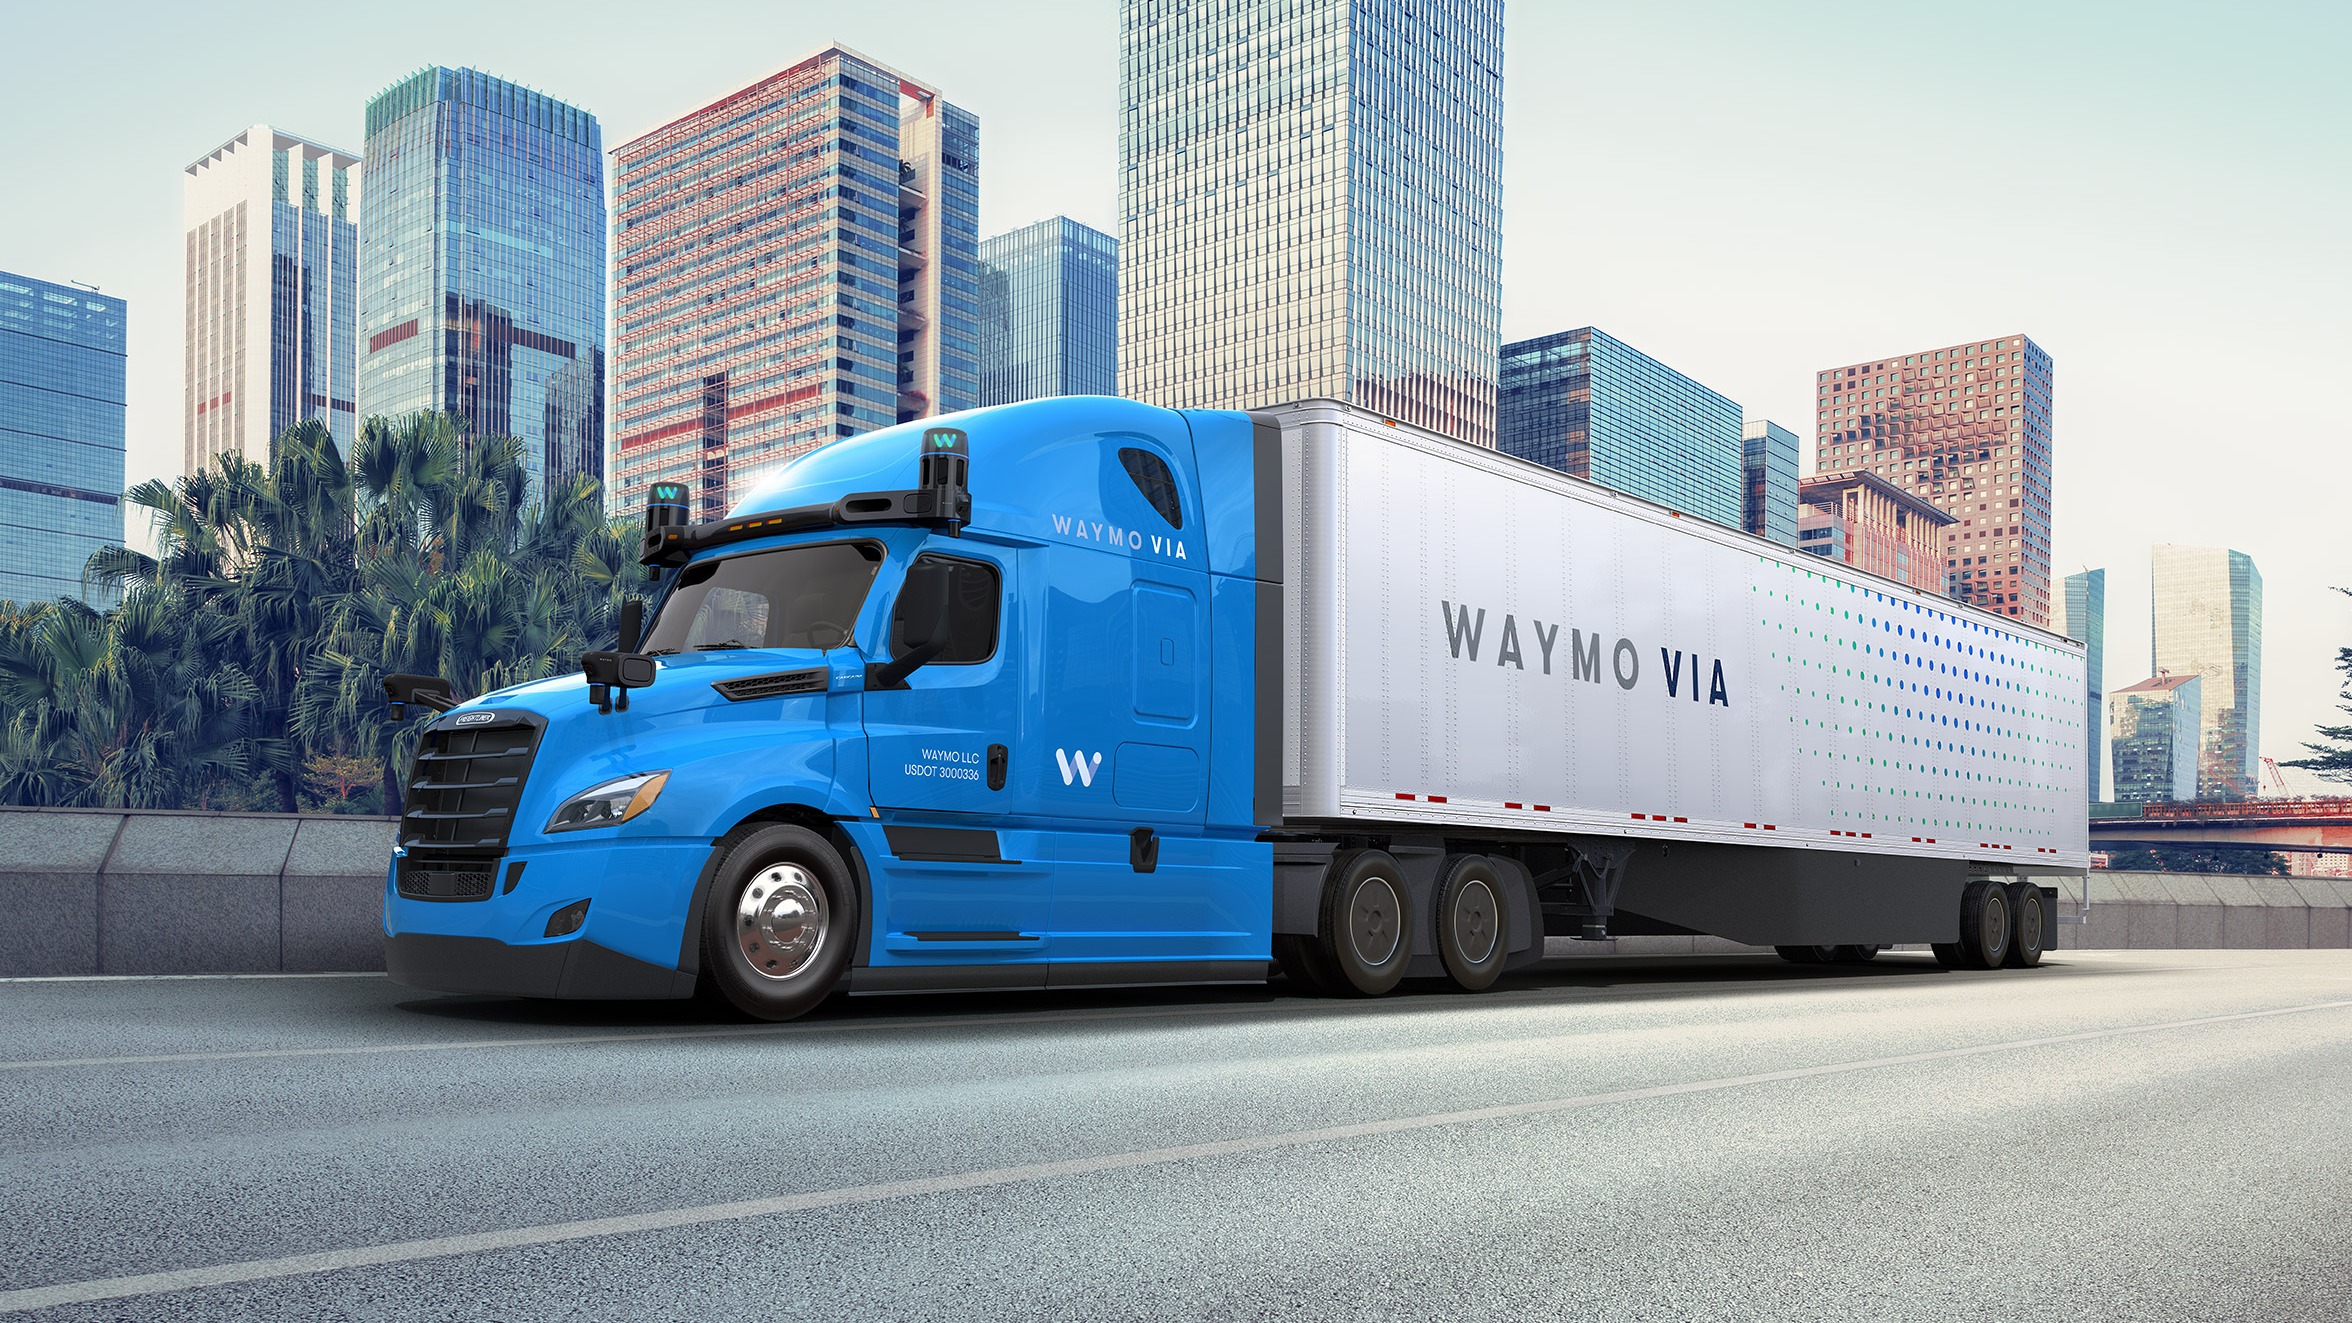 Waymo Via truck driving down a highway